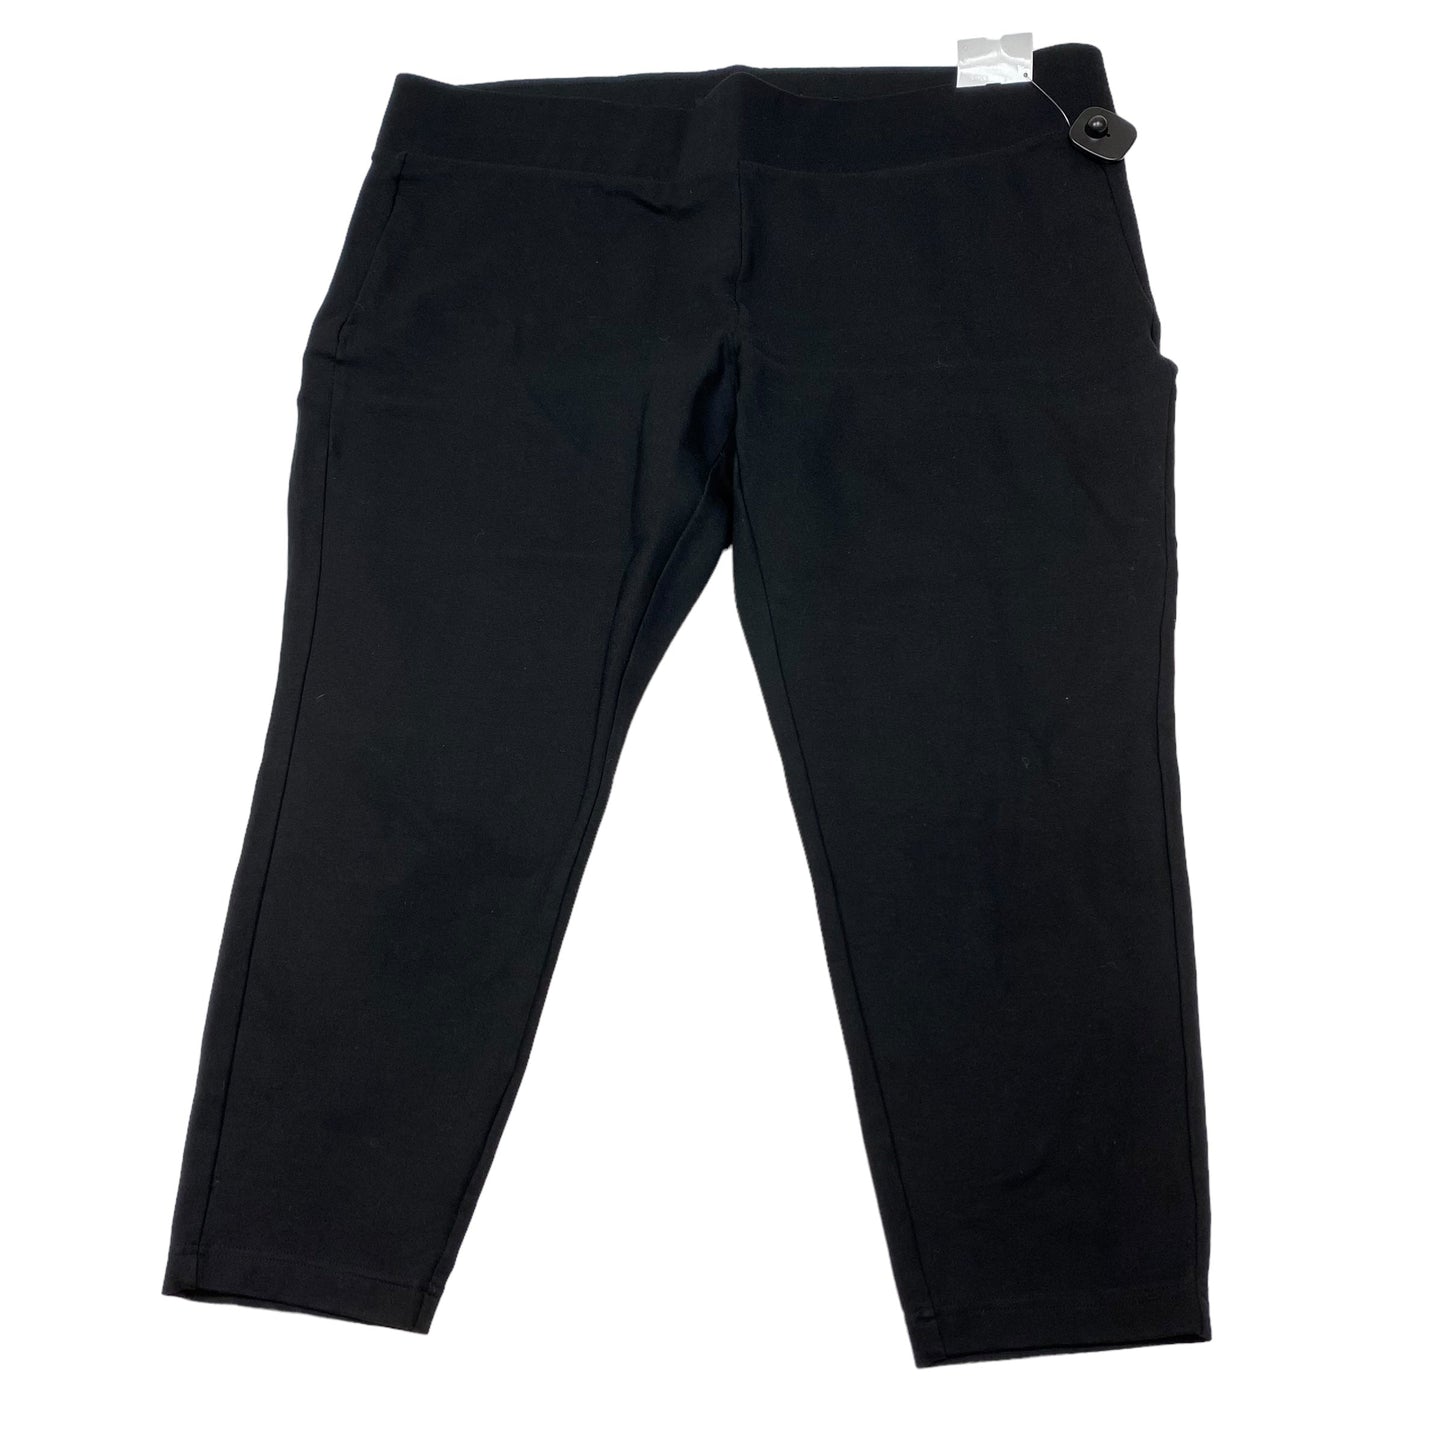 Black Pants Leggings Torrid, Size 4x